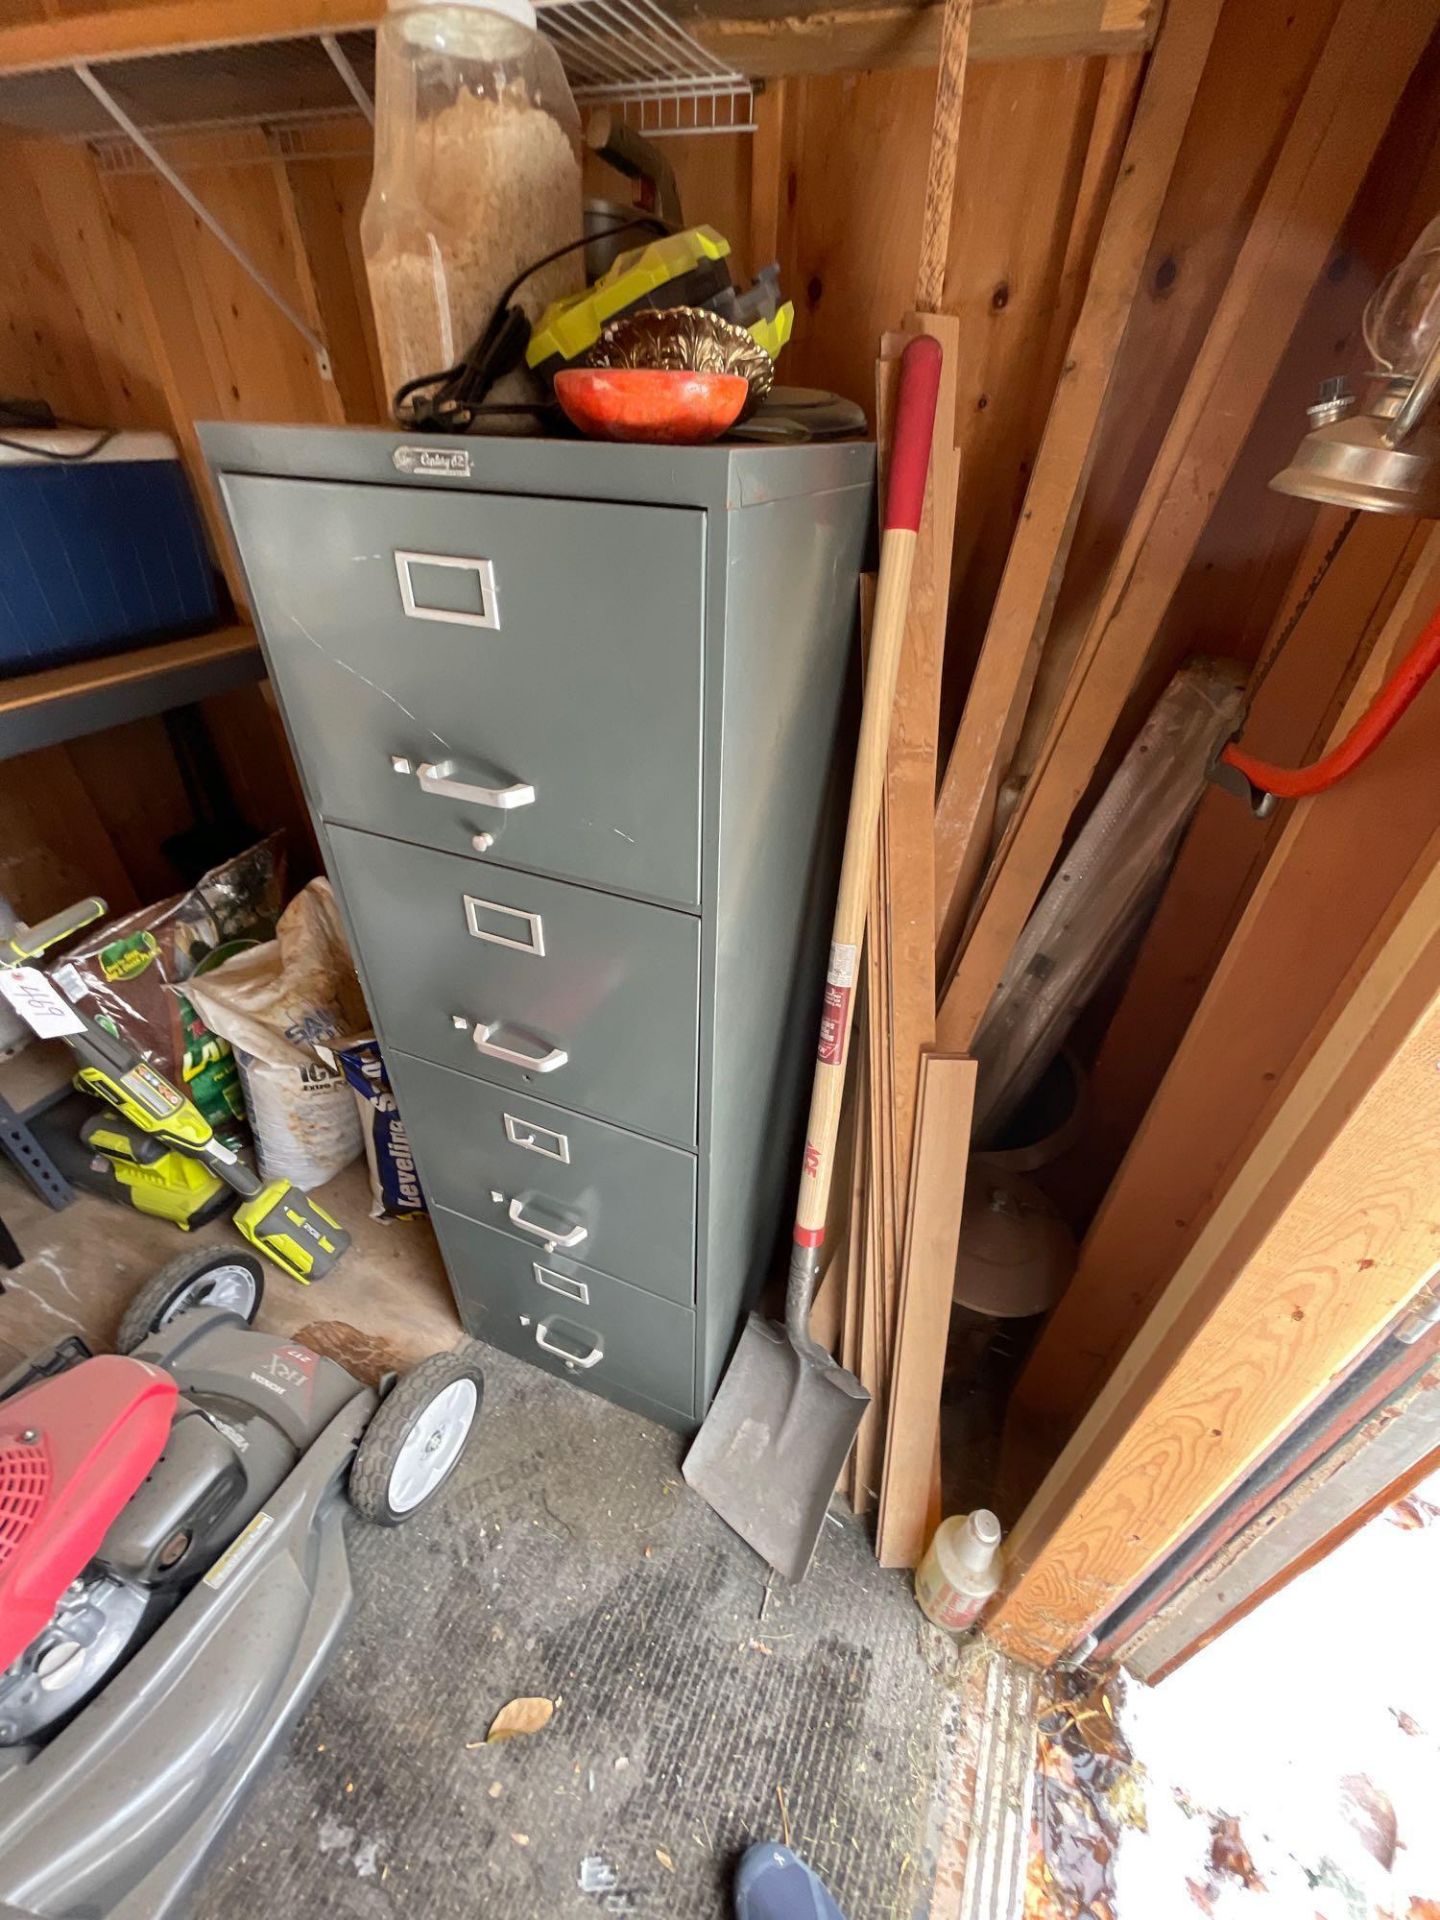 contents of shed (file cabinet, side table, cooler, Scotts seed, hoses, shovel etc)